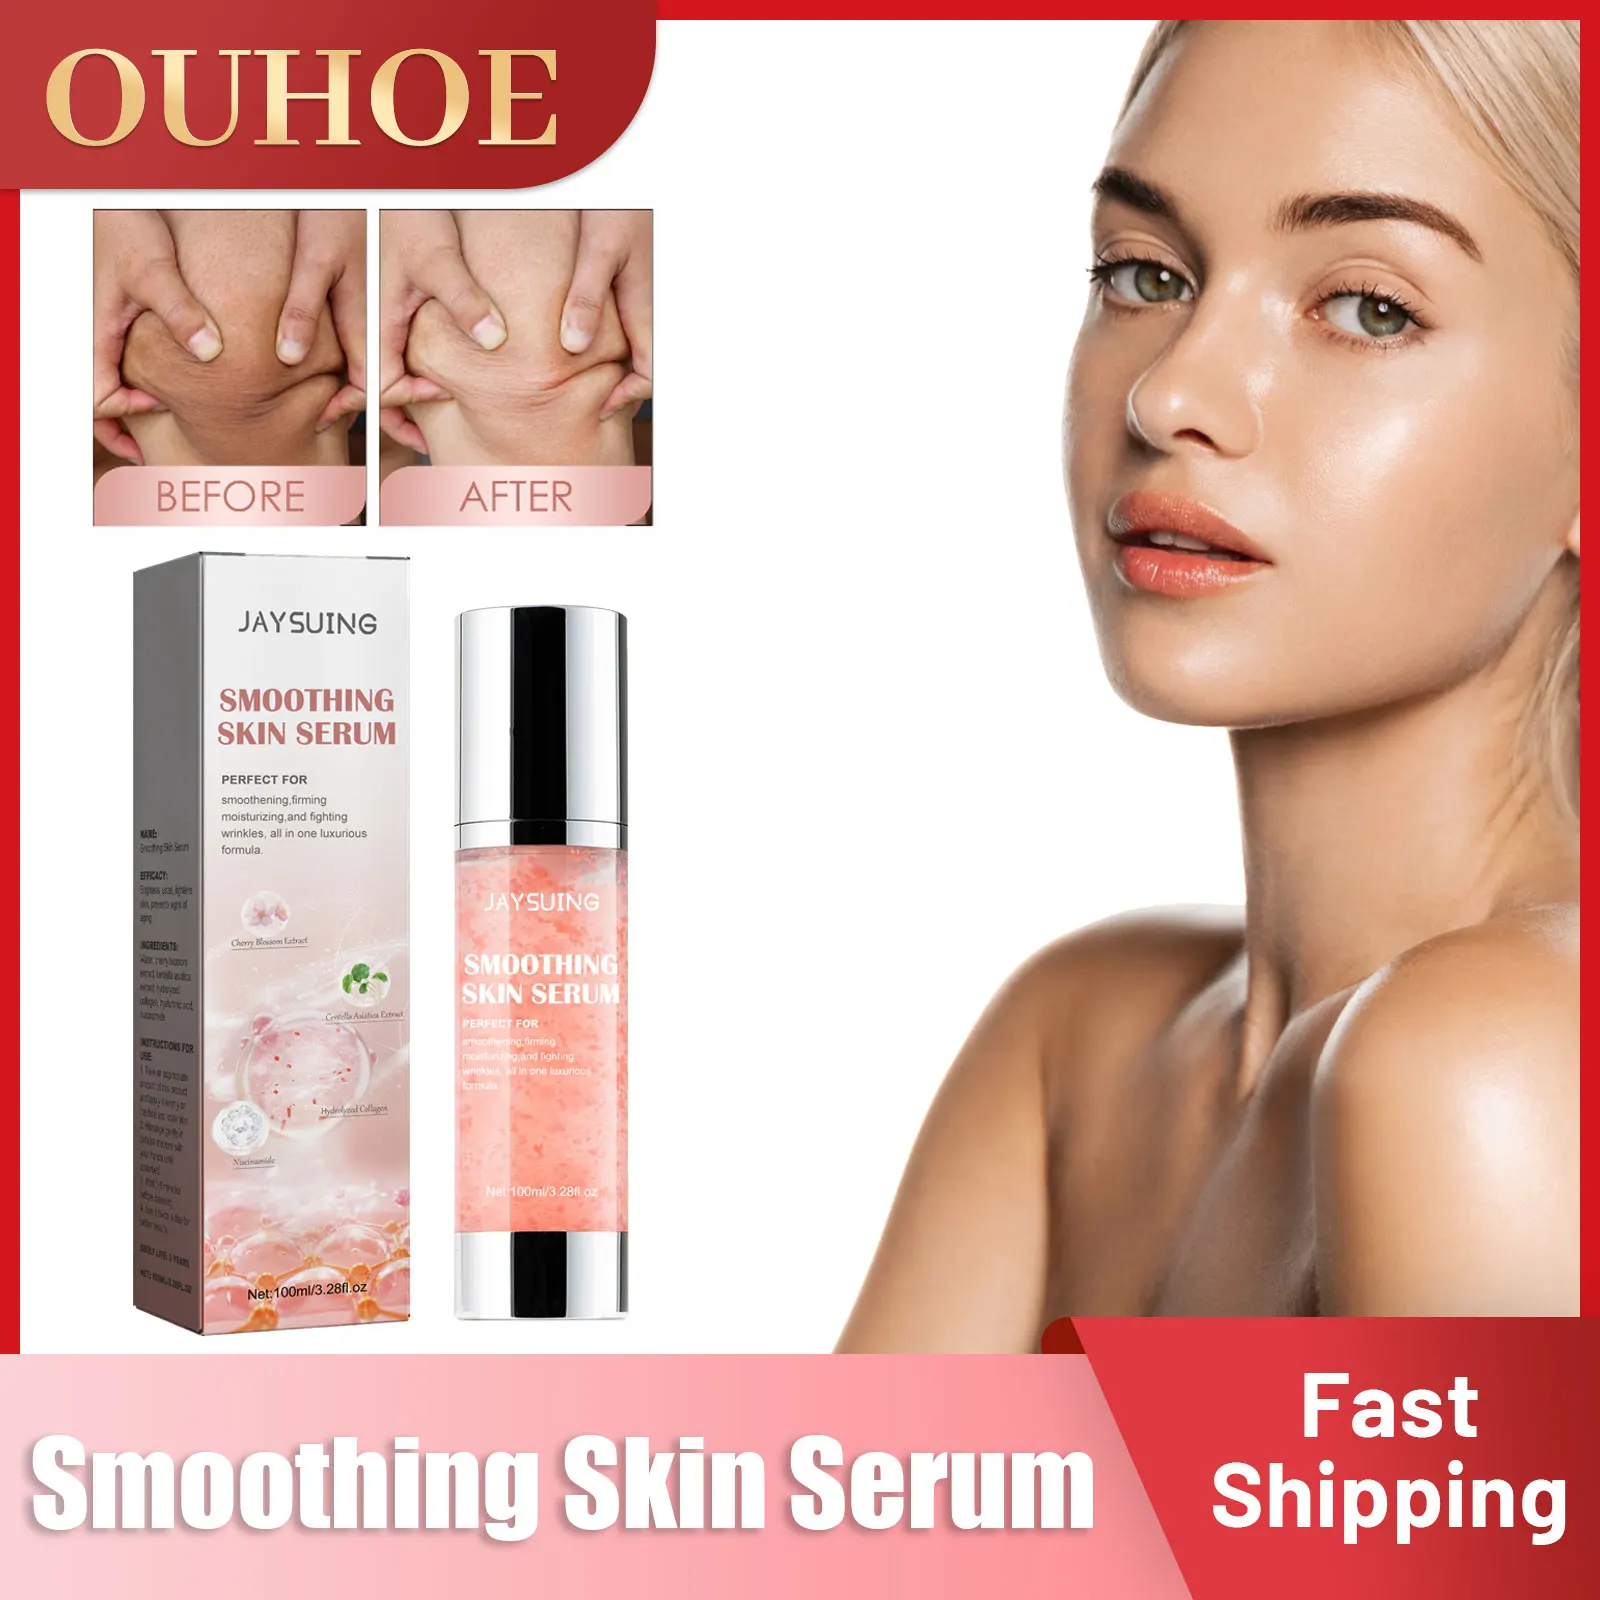 

Smoothing Skin Serum Firming Tightening Anti Aging Wrinkles Shrink Pores Hydrating Whitening Fine Lines Moisturizing Body Lotion